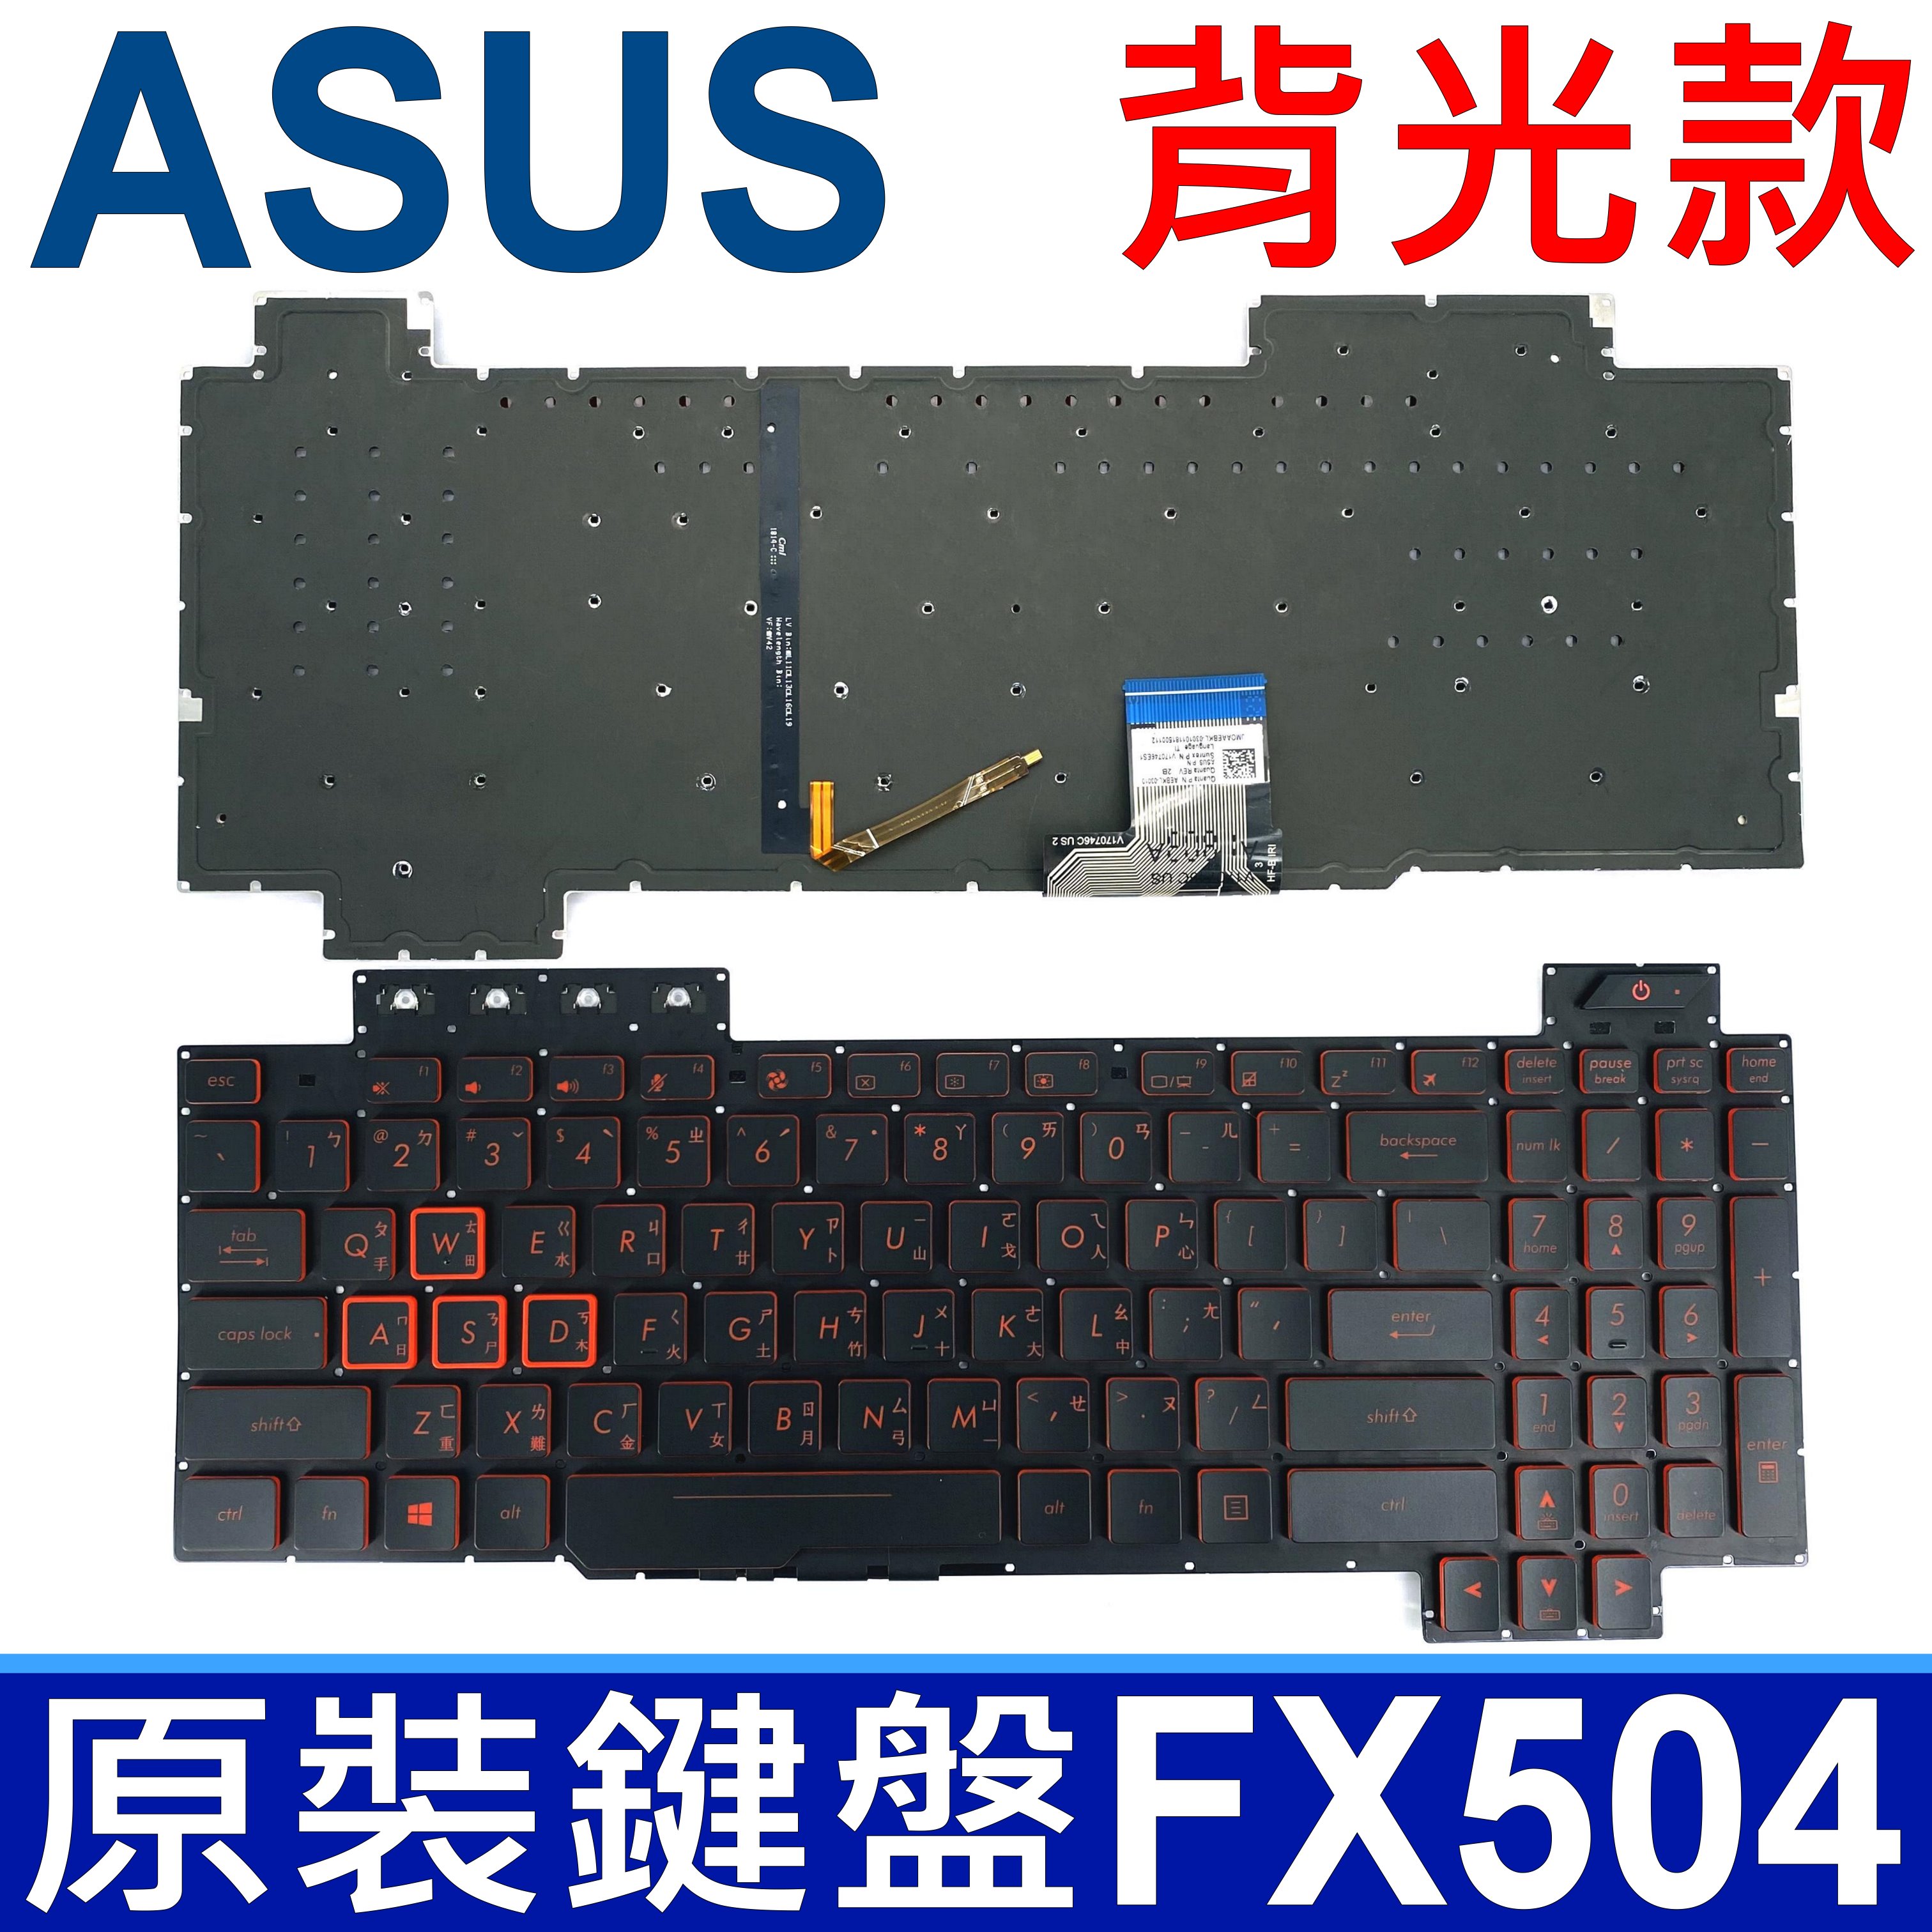 ASUS FX504 黑鍵紅字 背光 繁體中文 鍵盤 FX505 FX505G FX505GD FZ80G ZX80G FX80 FX80G FX80GE FX86 FX86S FX86F